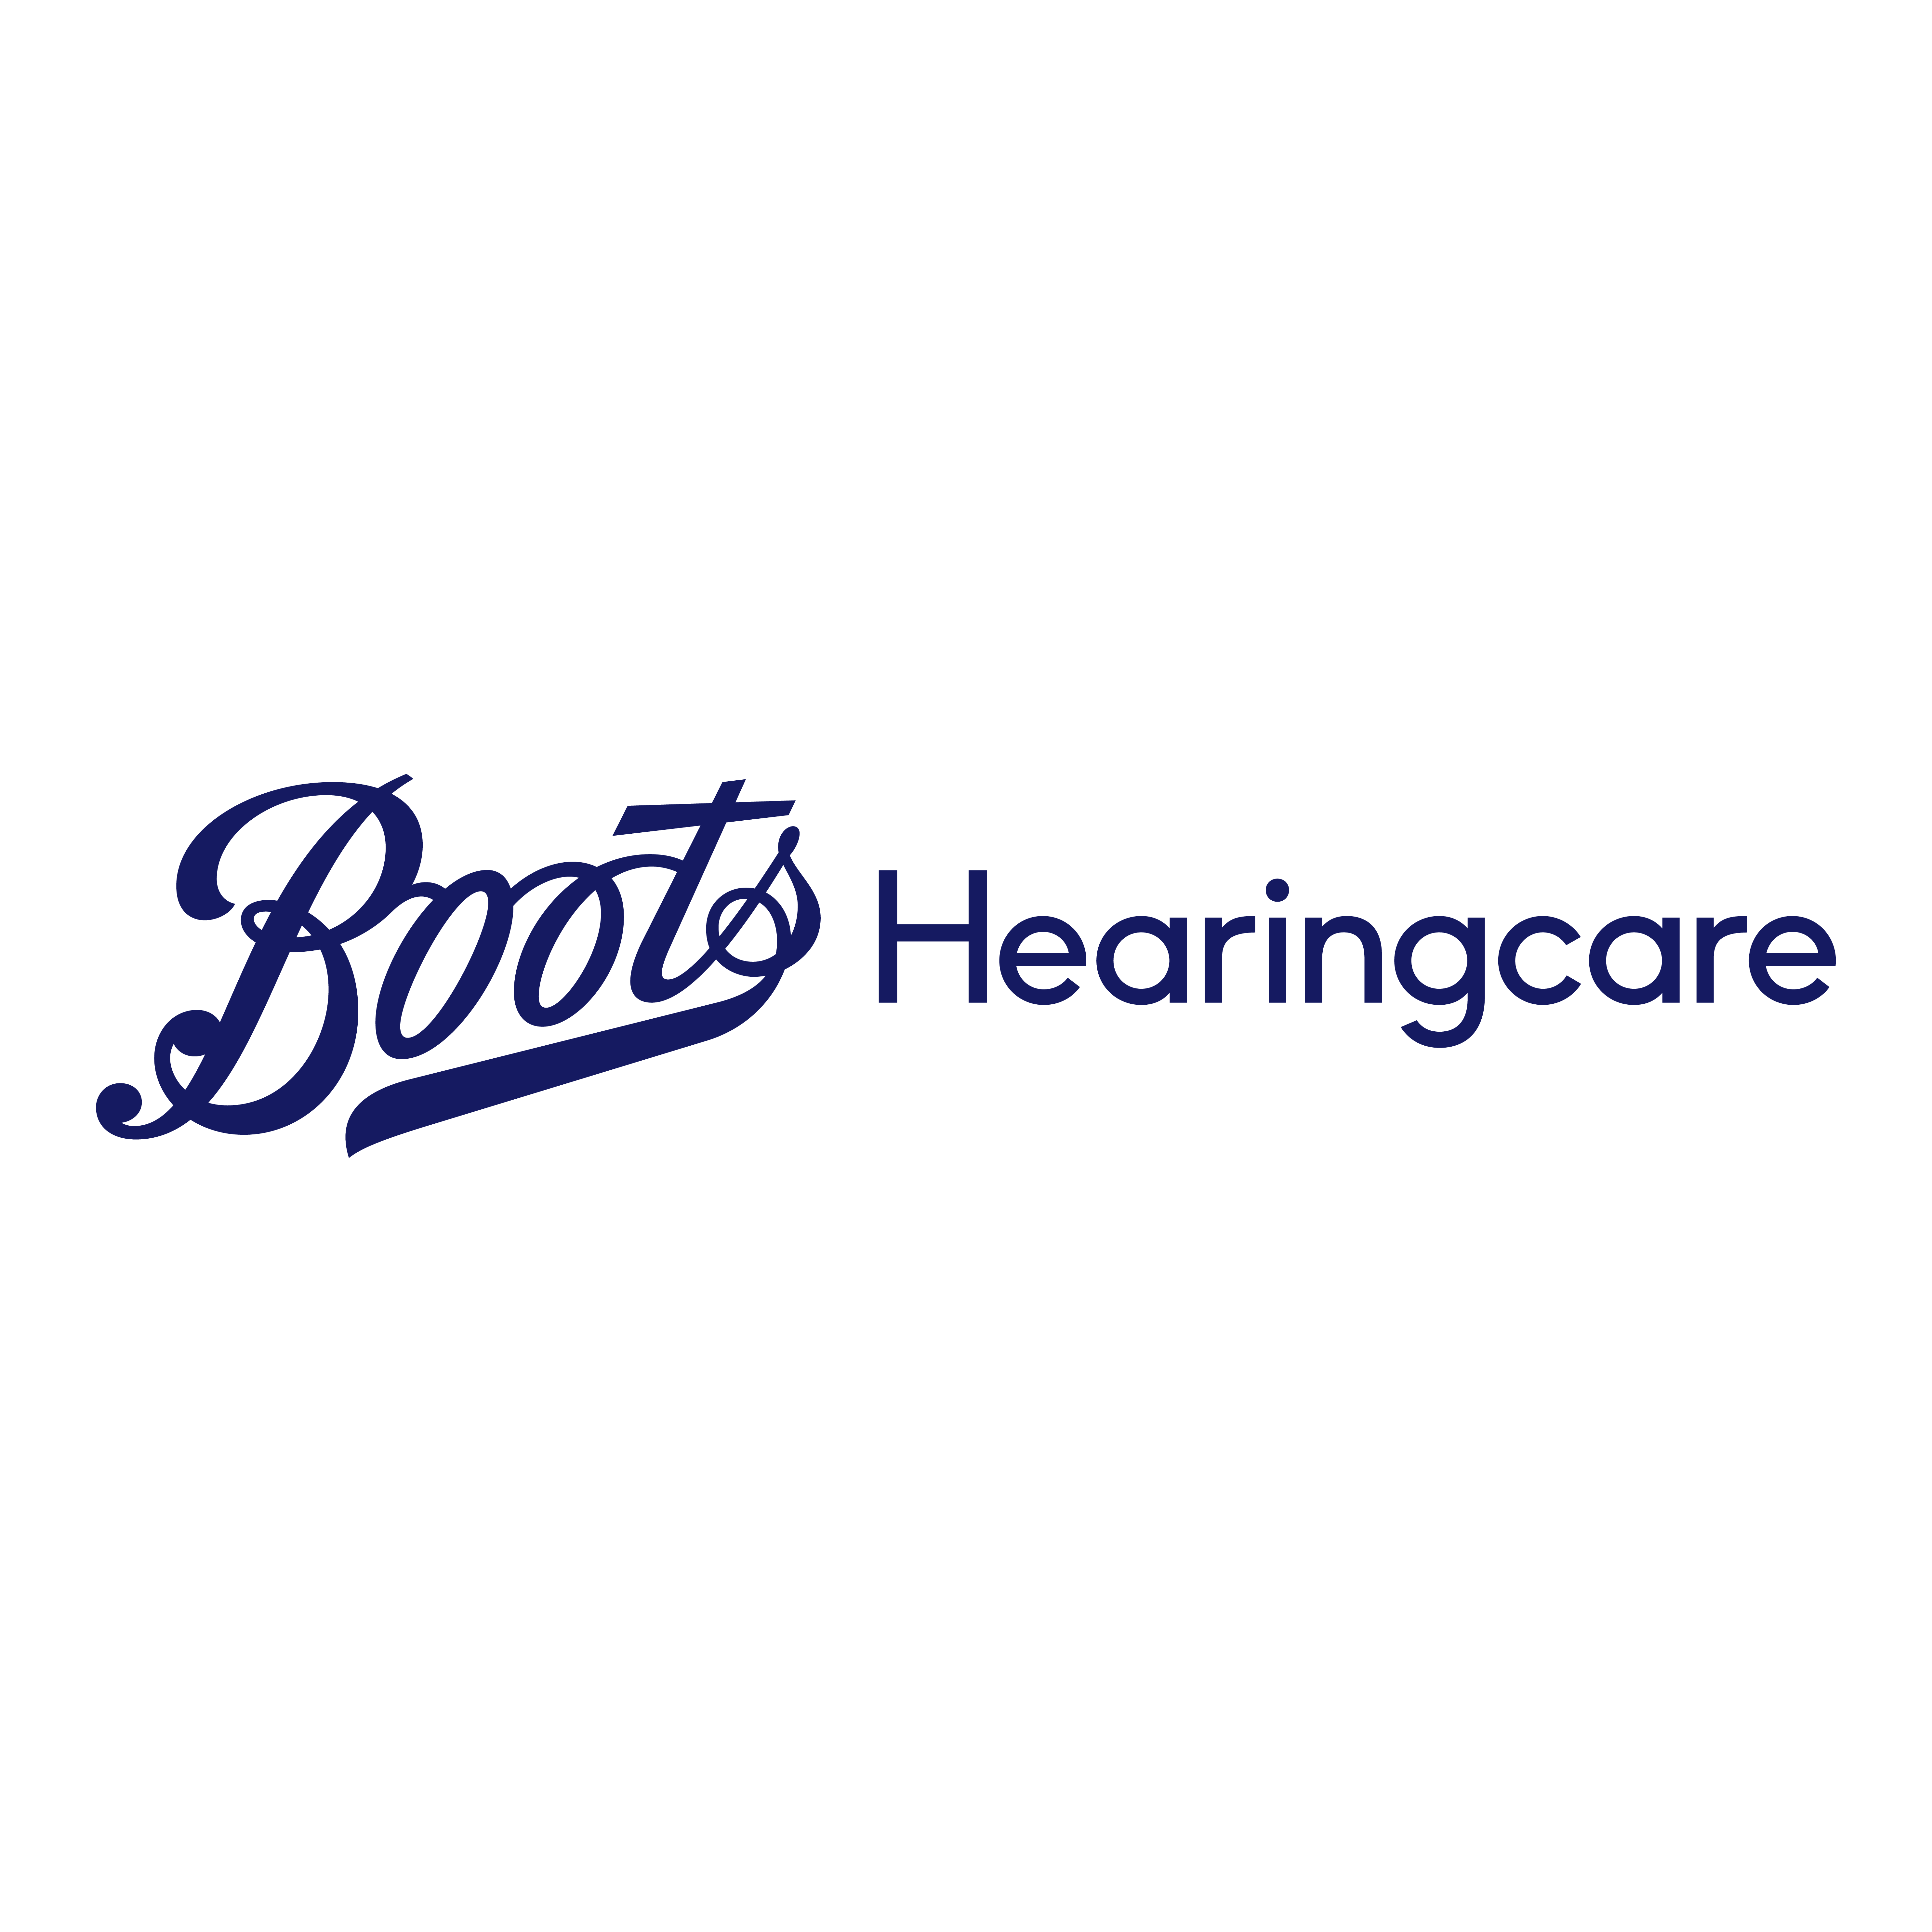 Boots Hearingcare